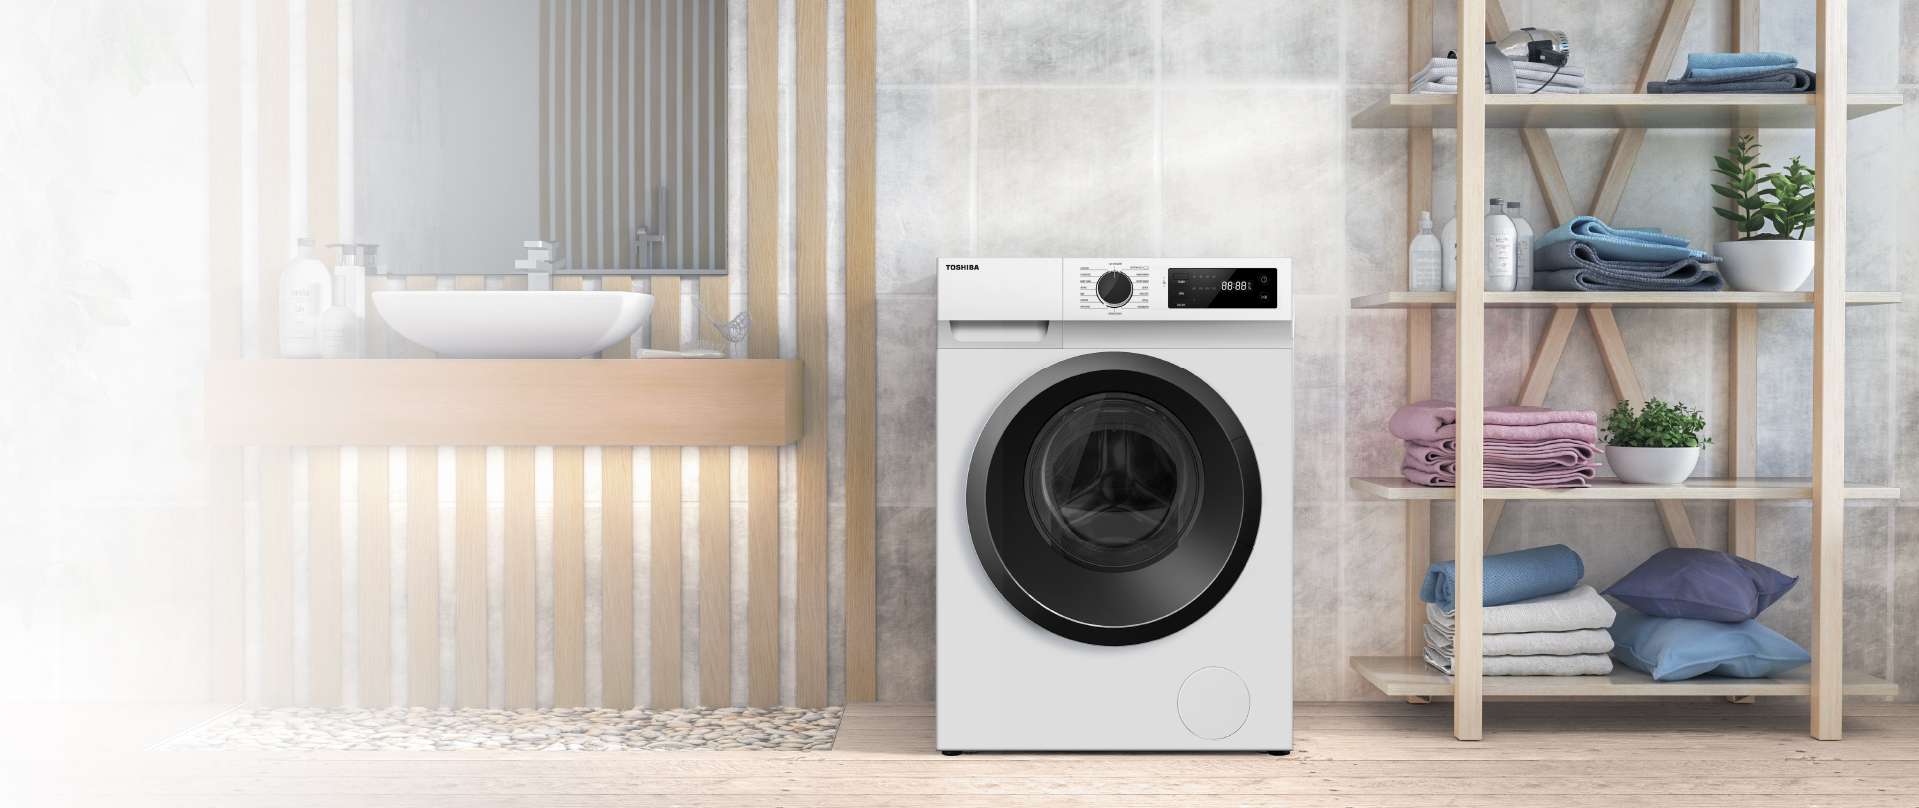 Toshiba Top Load Washing Machine | Details Matter